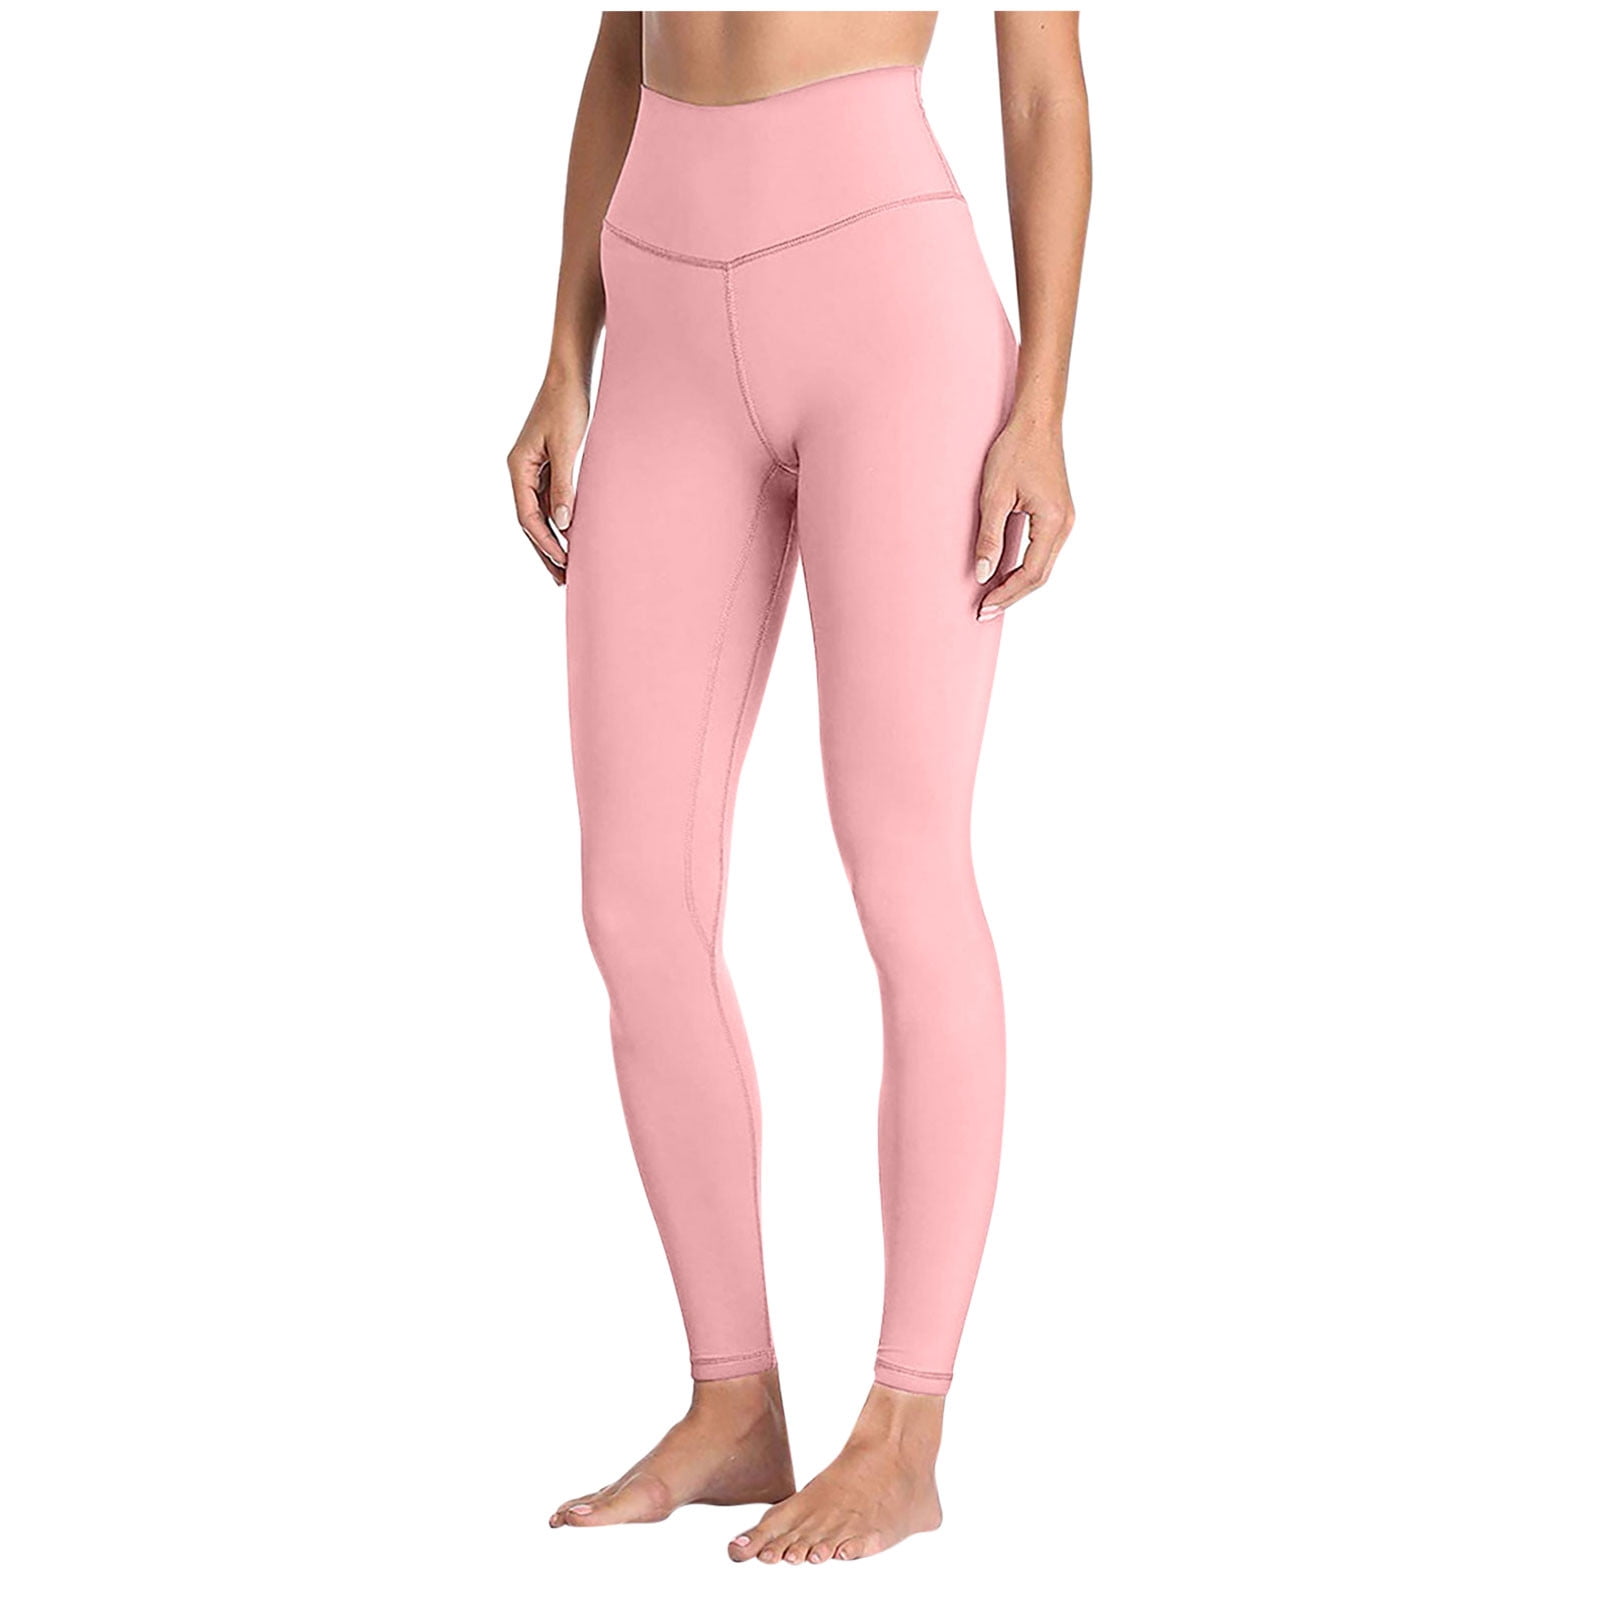 Top more than 146 light pink workout leggings